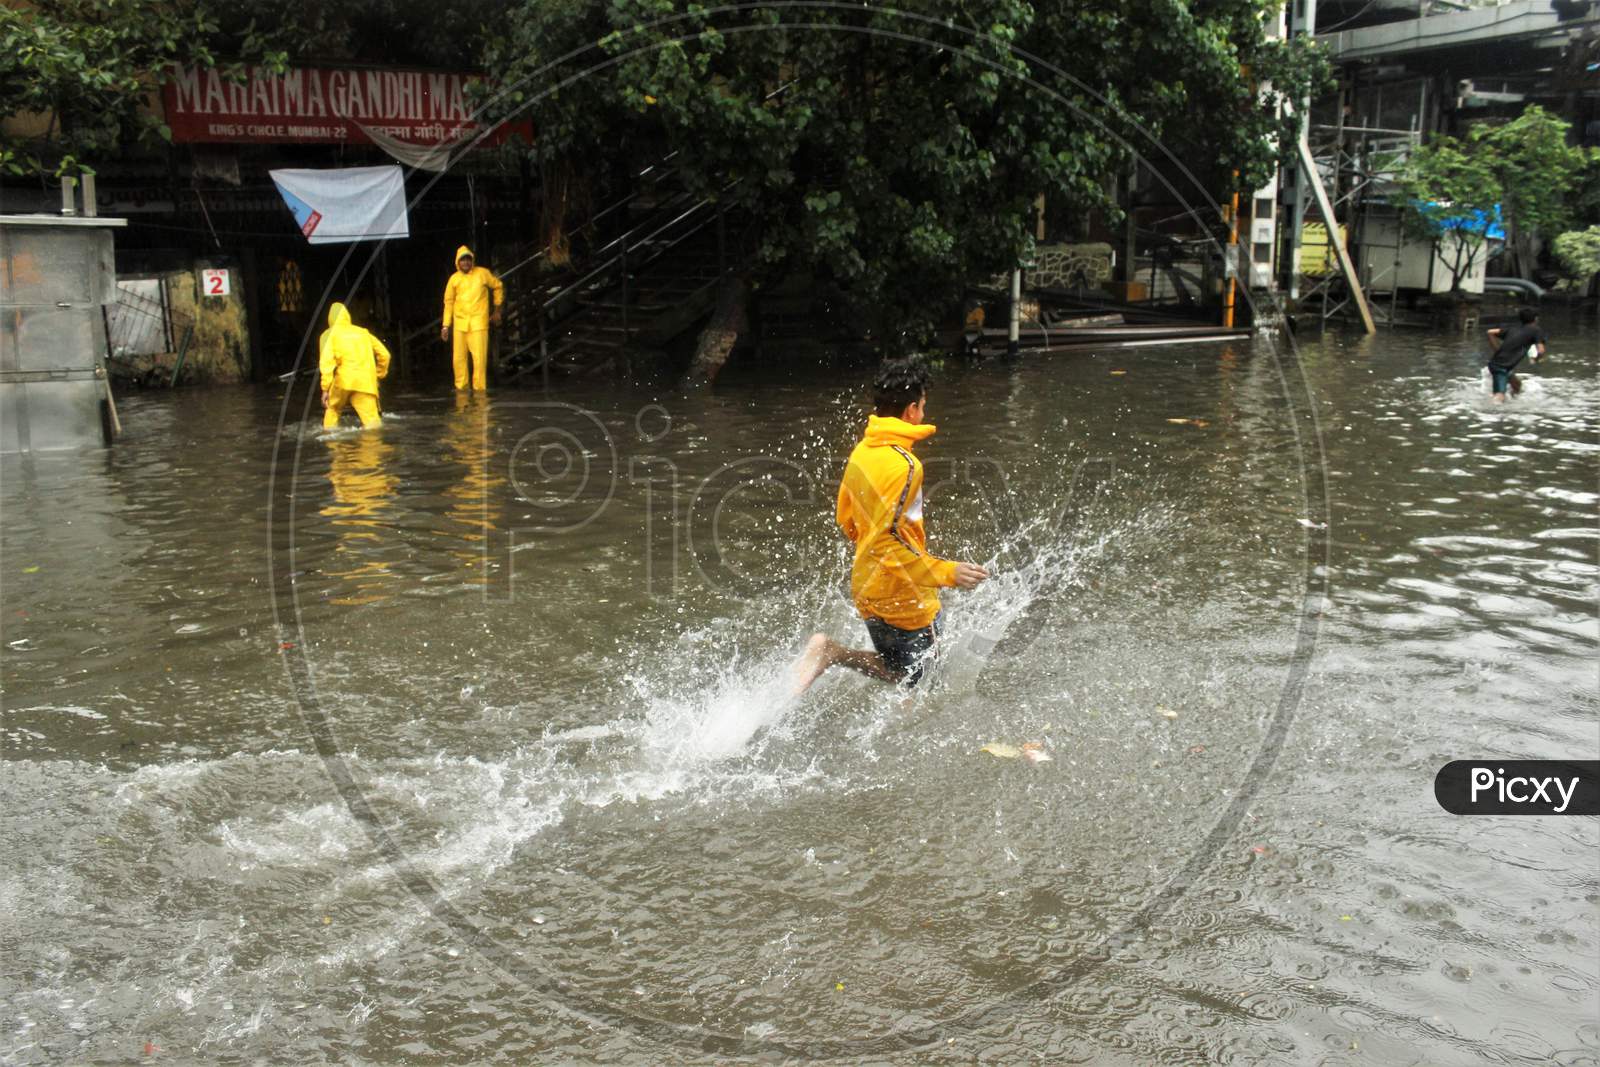 A boy runs on waterlogged road during rains, in Mumbai, India, July, 2020.